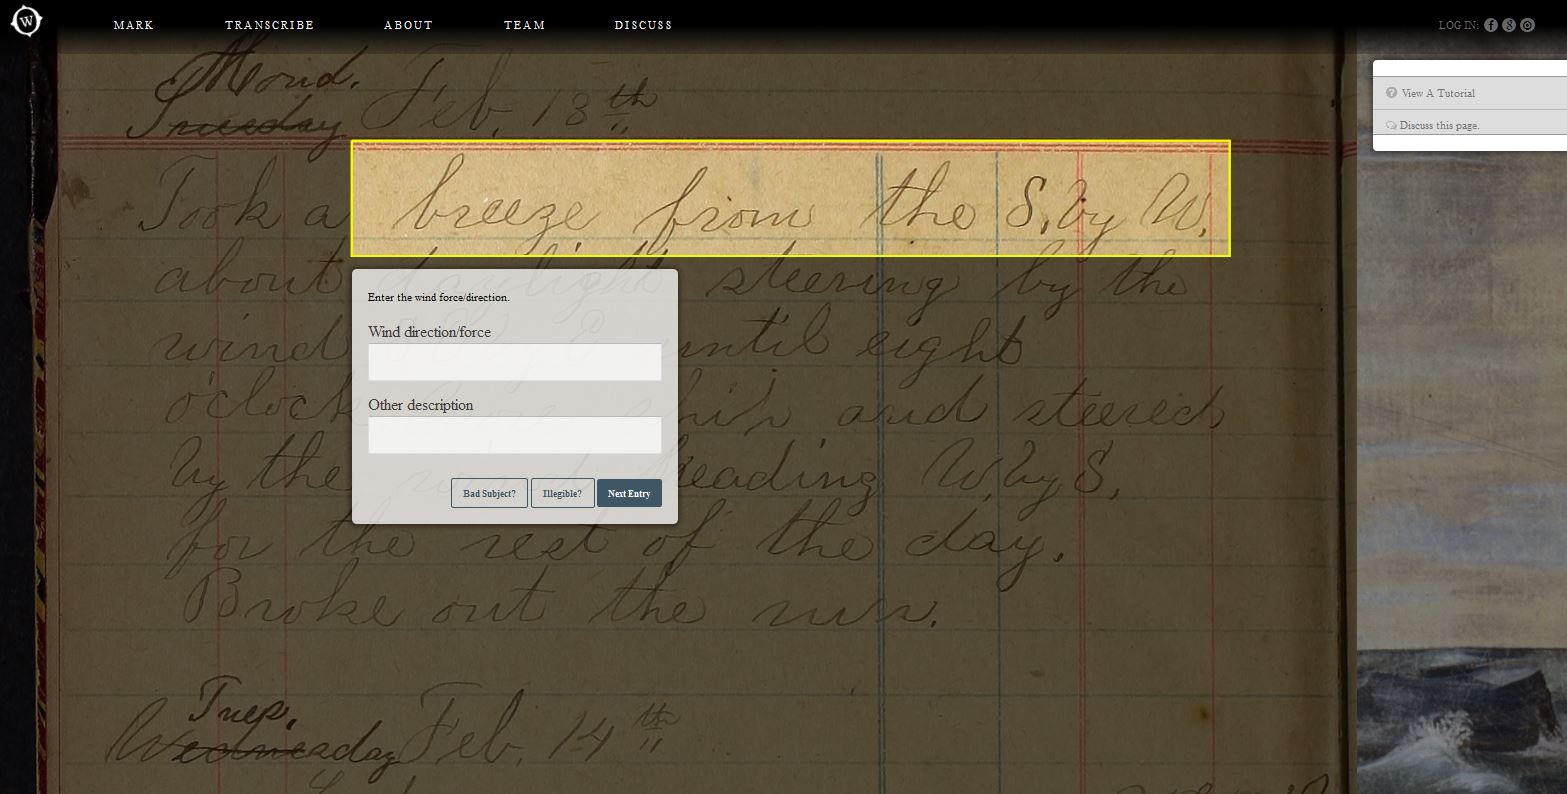 Interface for transcribing logbooks